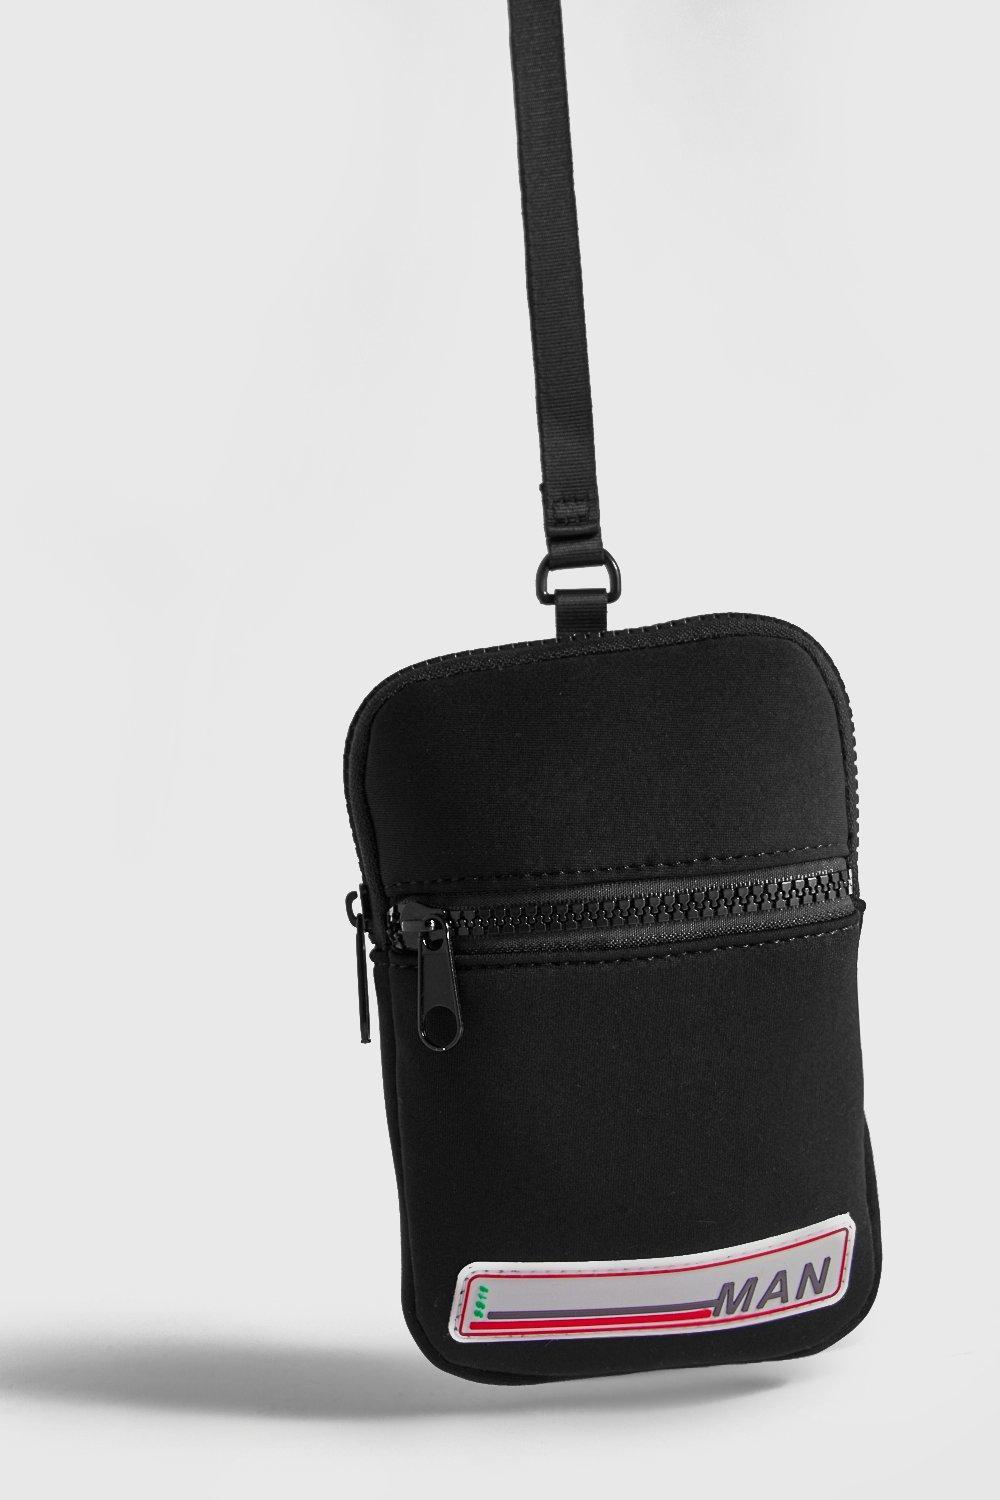 Boohoo Neoprene Man Tab Mini Cross Body Bag in Black for Men - Lyst